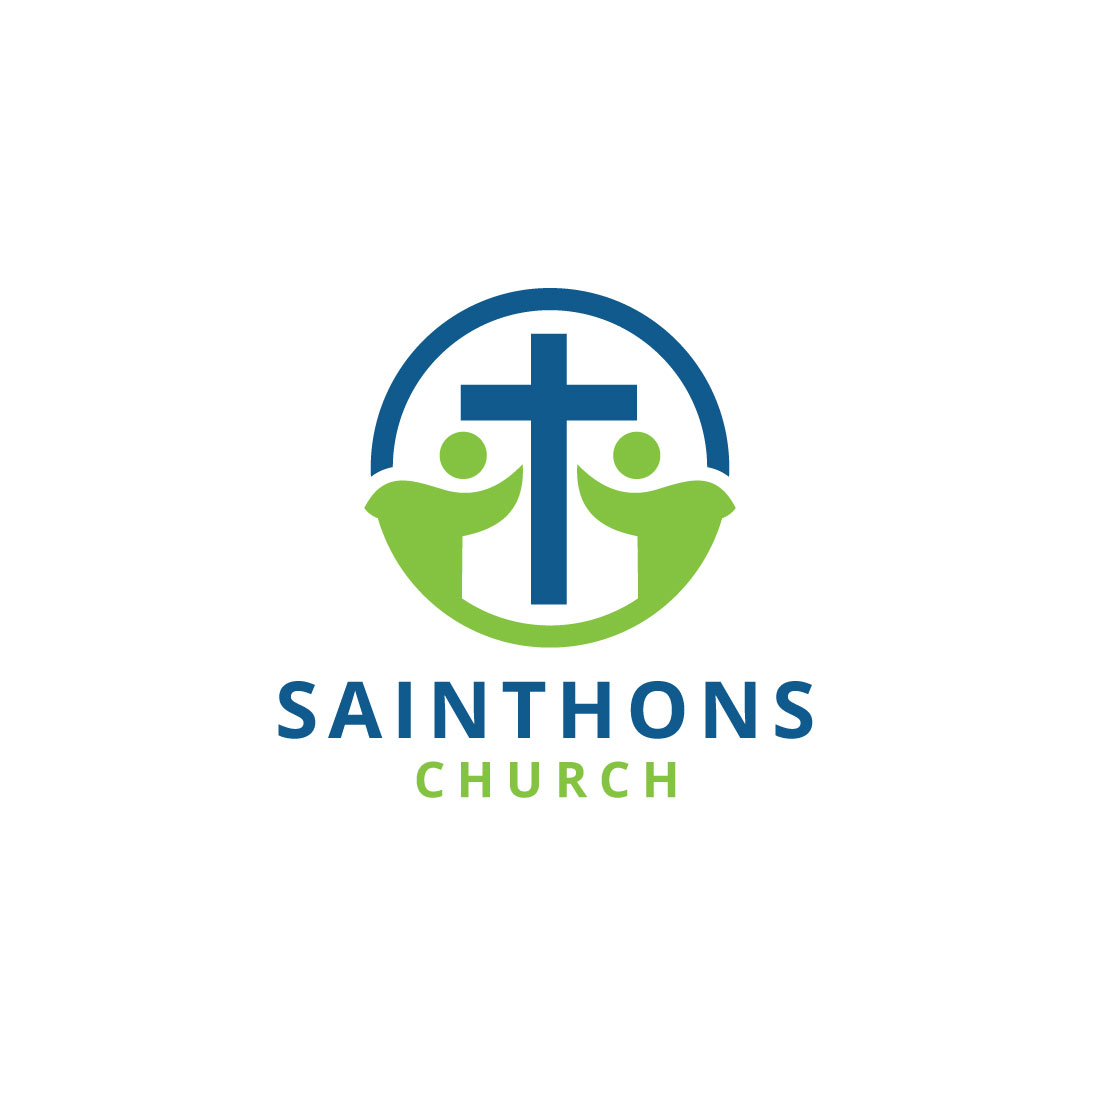 Church logo, religious family icon, Christian sign preview image.